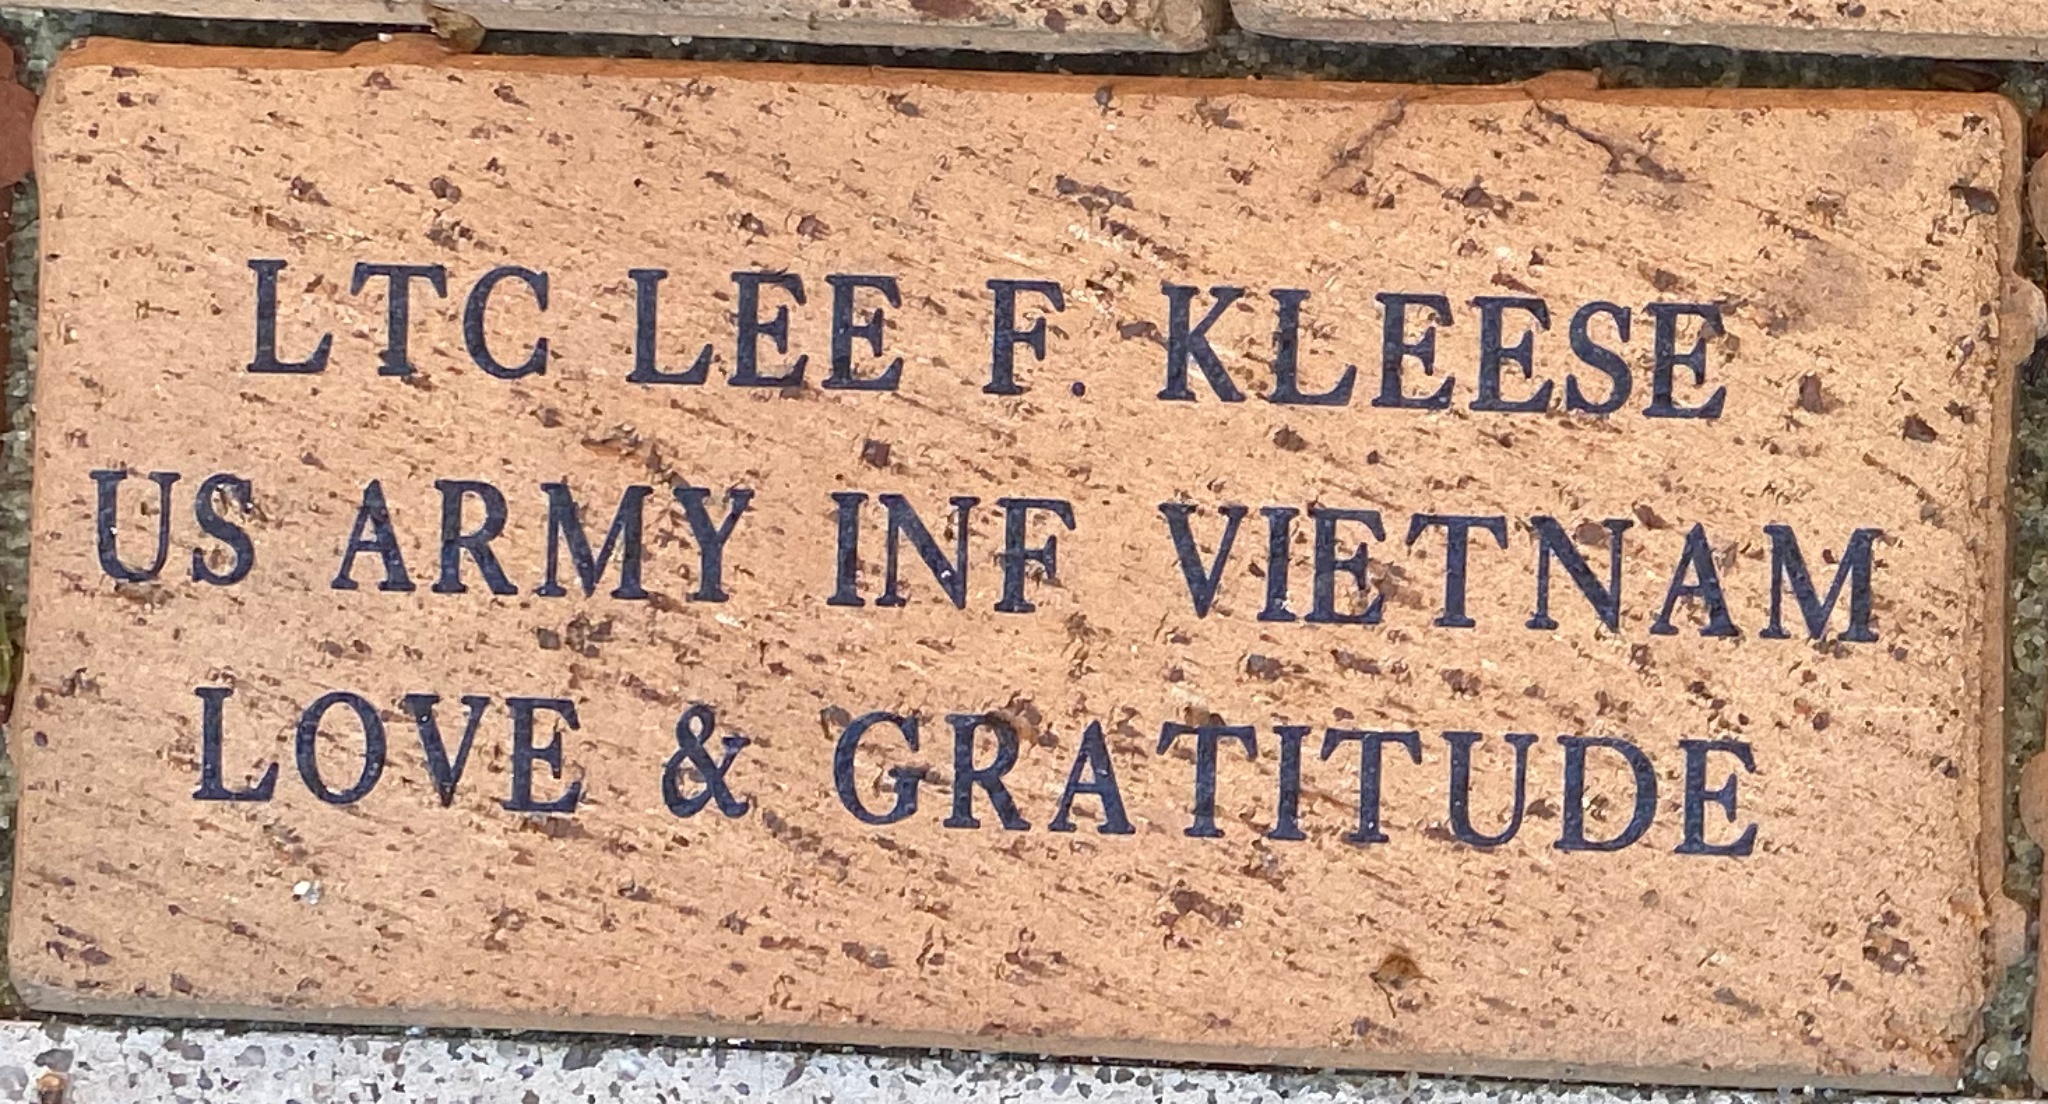 LTC LEE F. KLEESE US ARMY INF VIETNAM LOVE & GRATITUDE